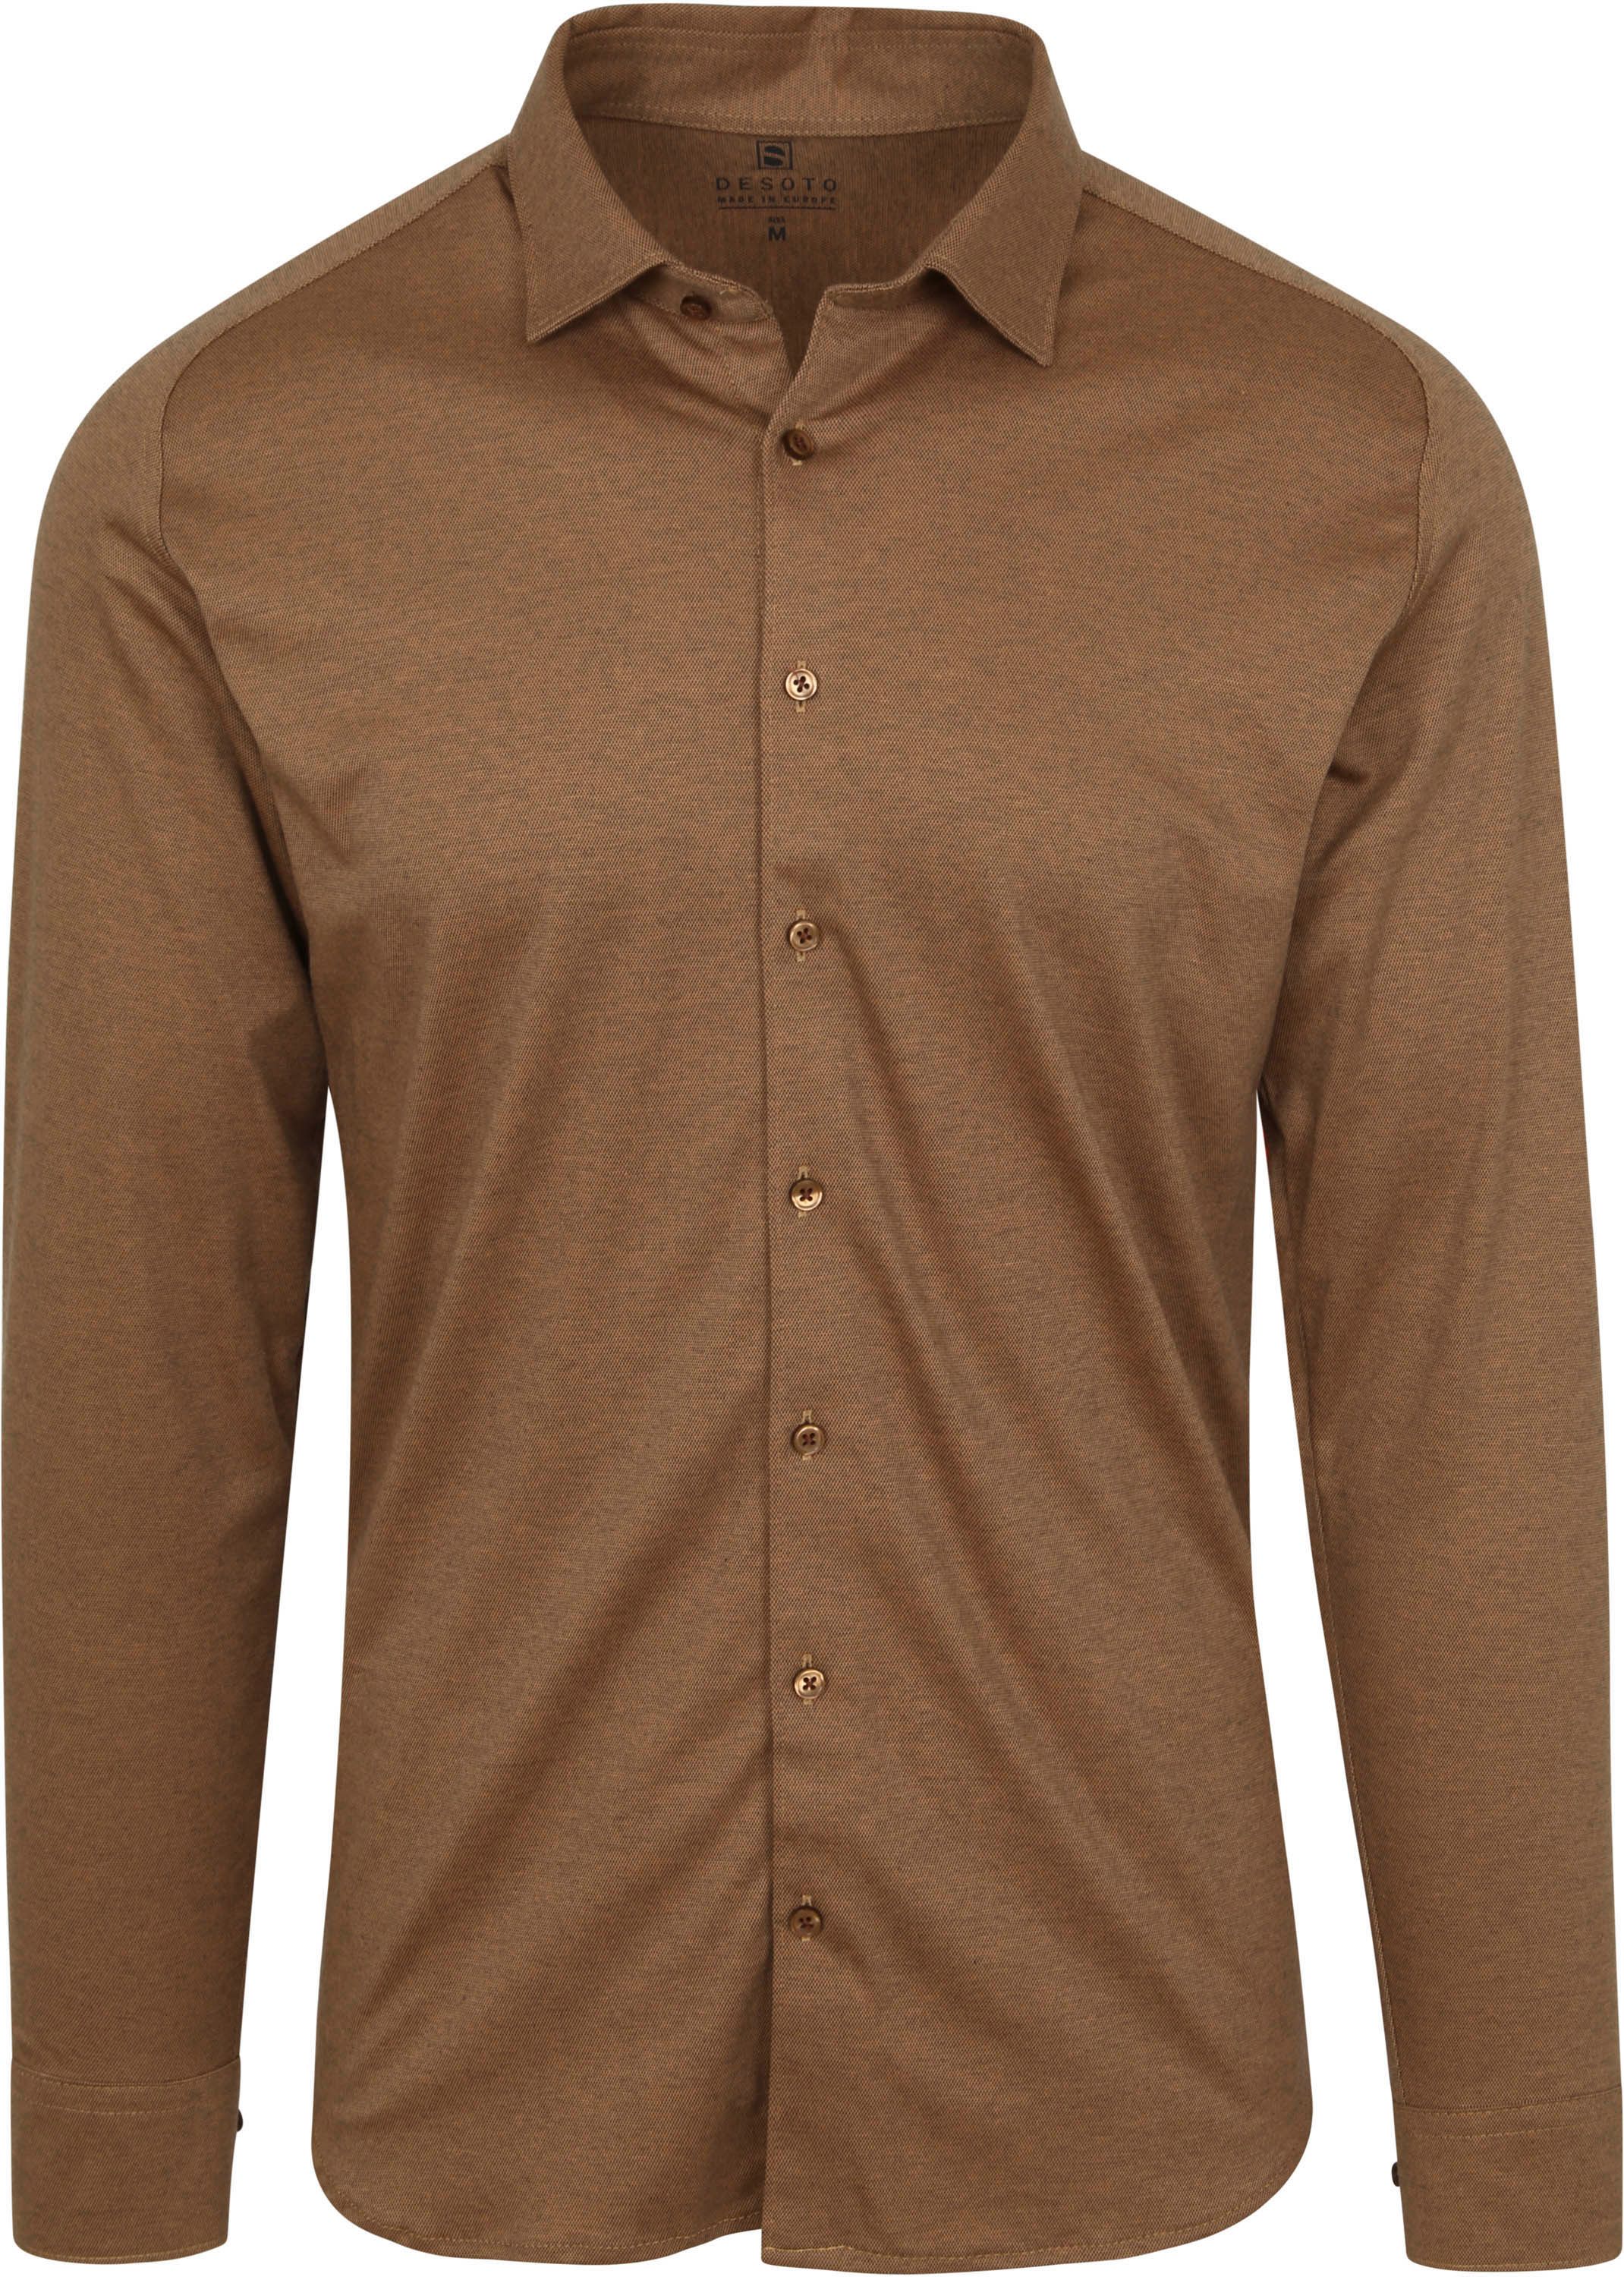 Desoto Shirt Non Iron Light Brown size 3XL